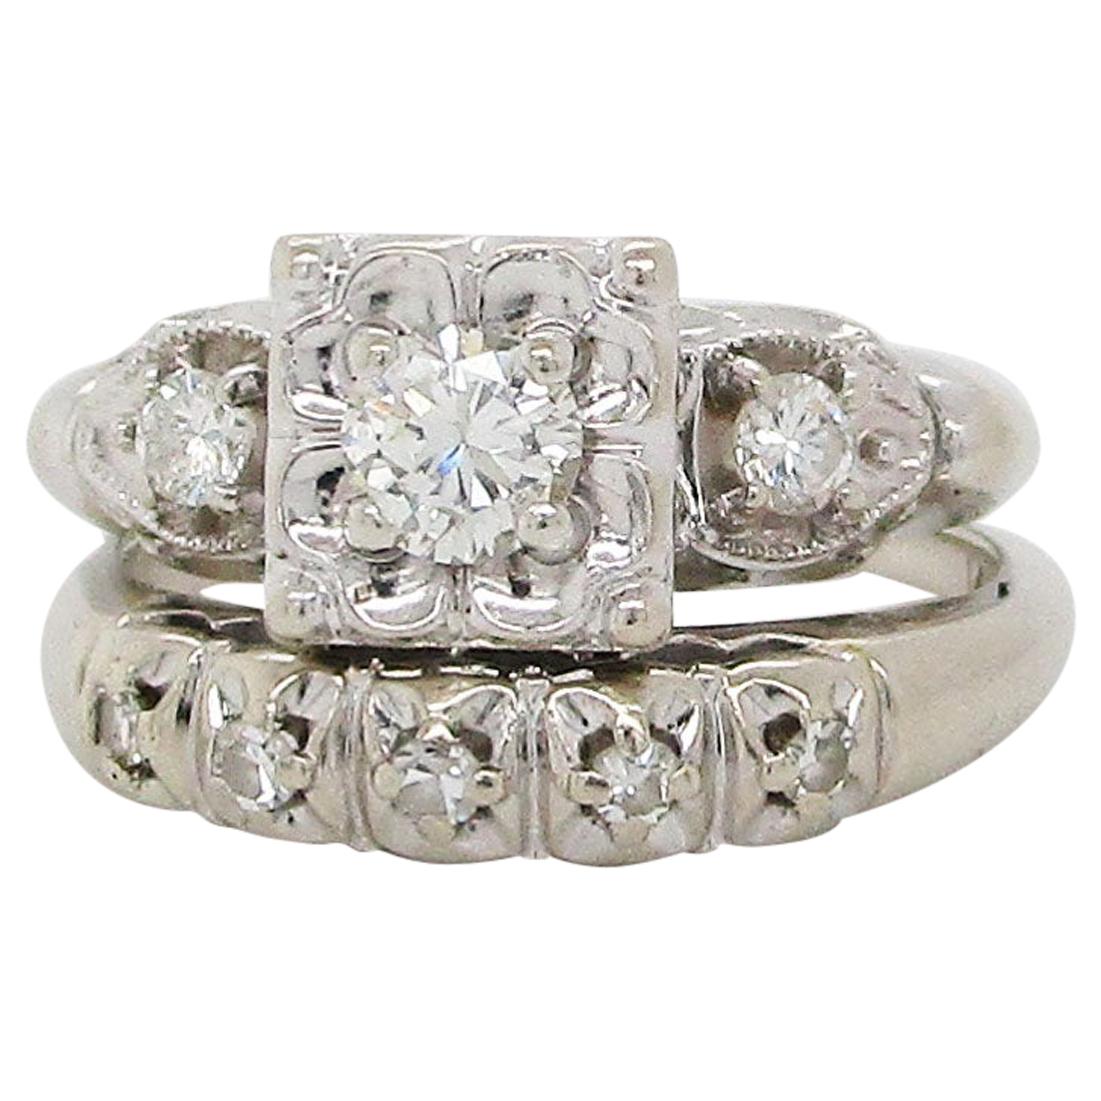 Vintage Mid Century Ring Setting Style - Mid Century Vintage Style 1/3 Carat Engagement Ring Mounting in 14 Karat White Gold